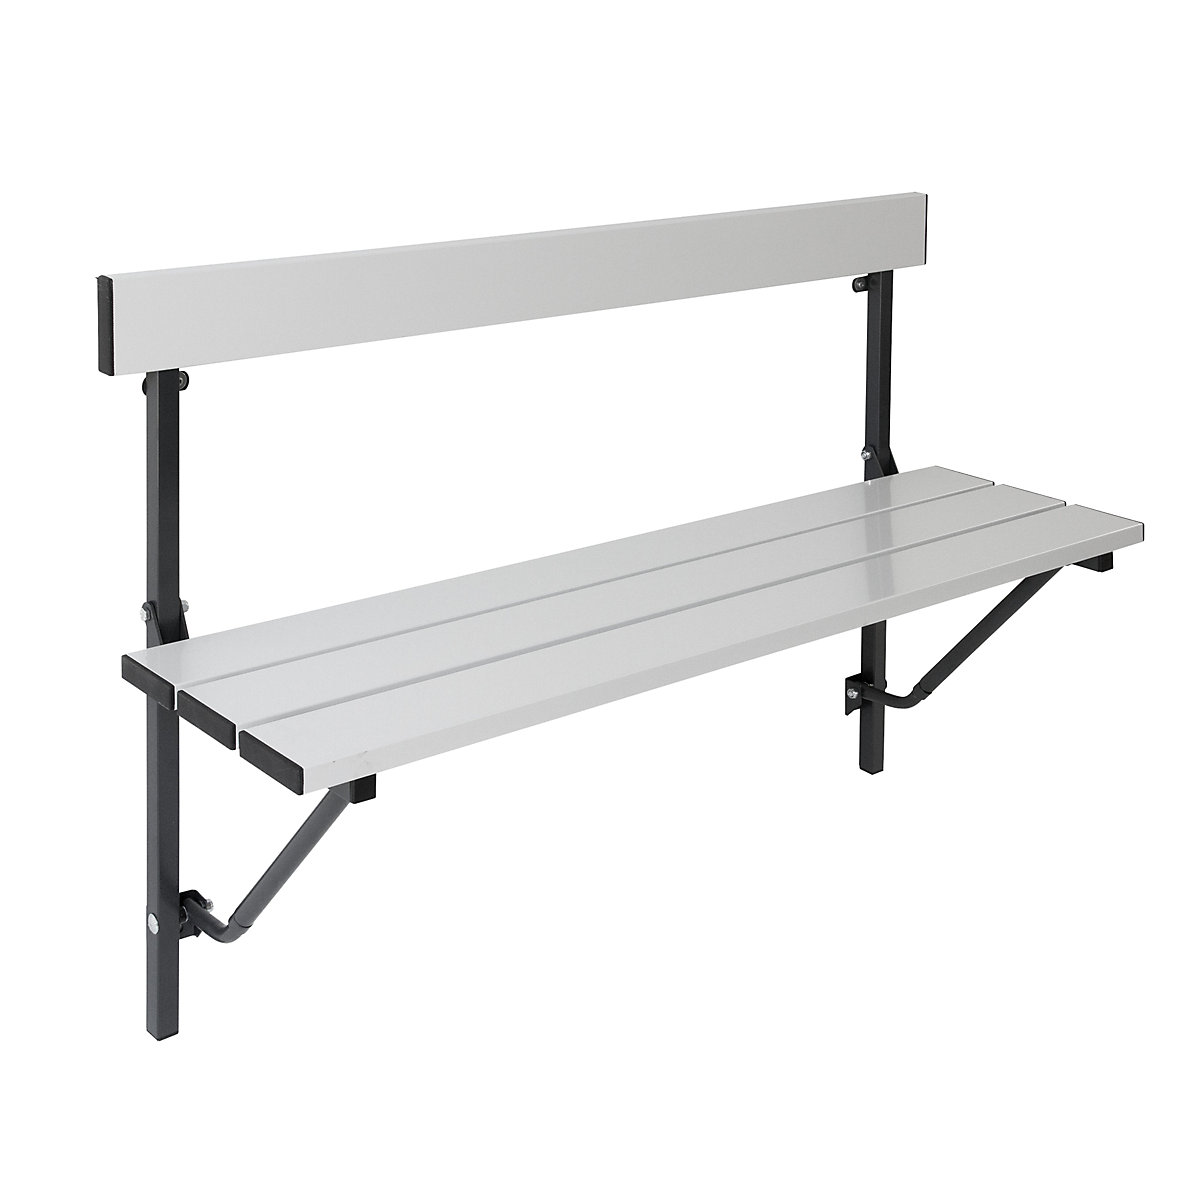 Sypro – Folding wall-mounted bench (Product illustration 2)